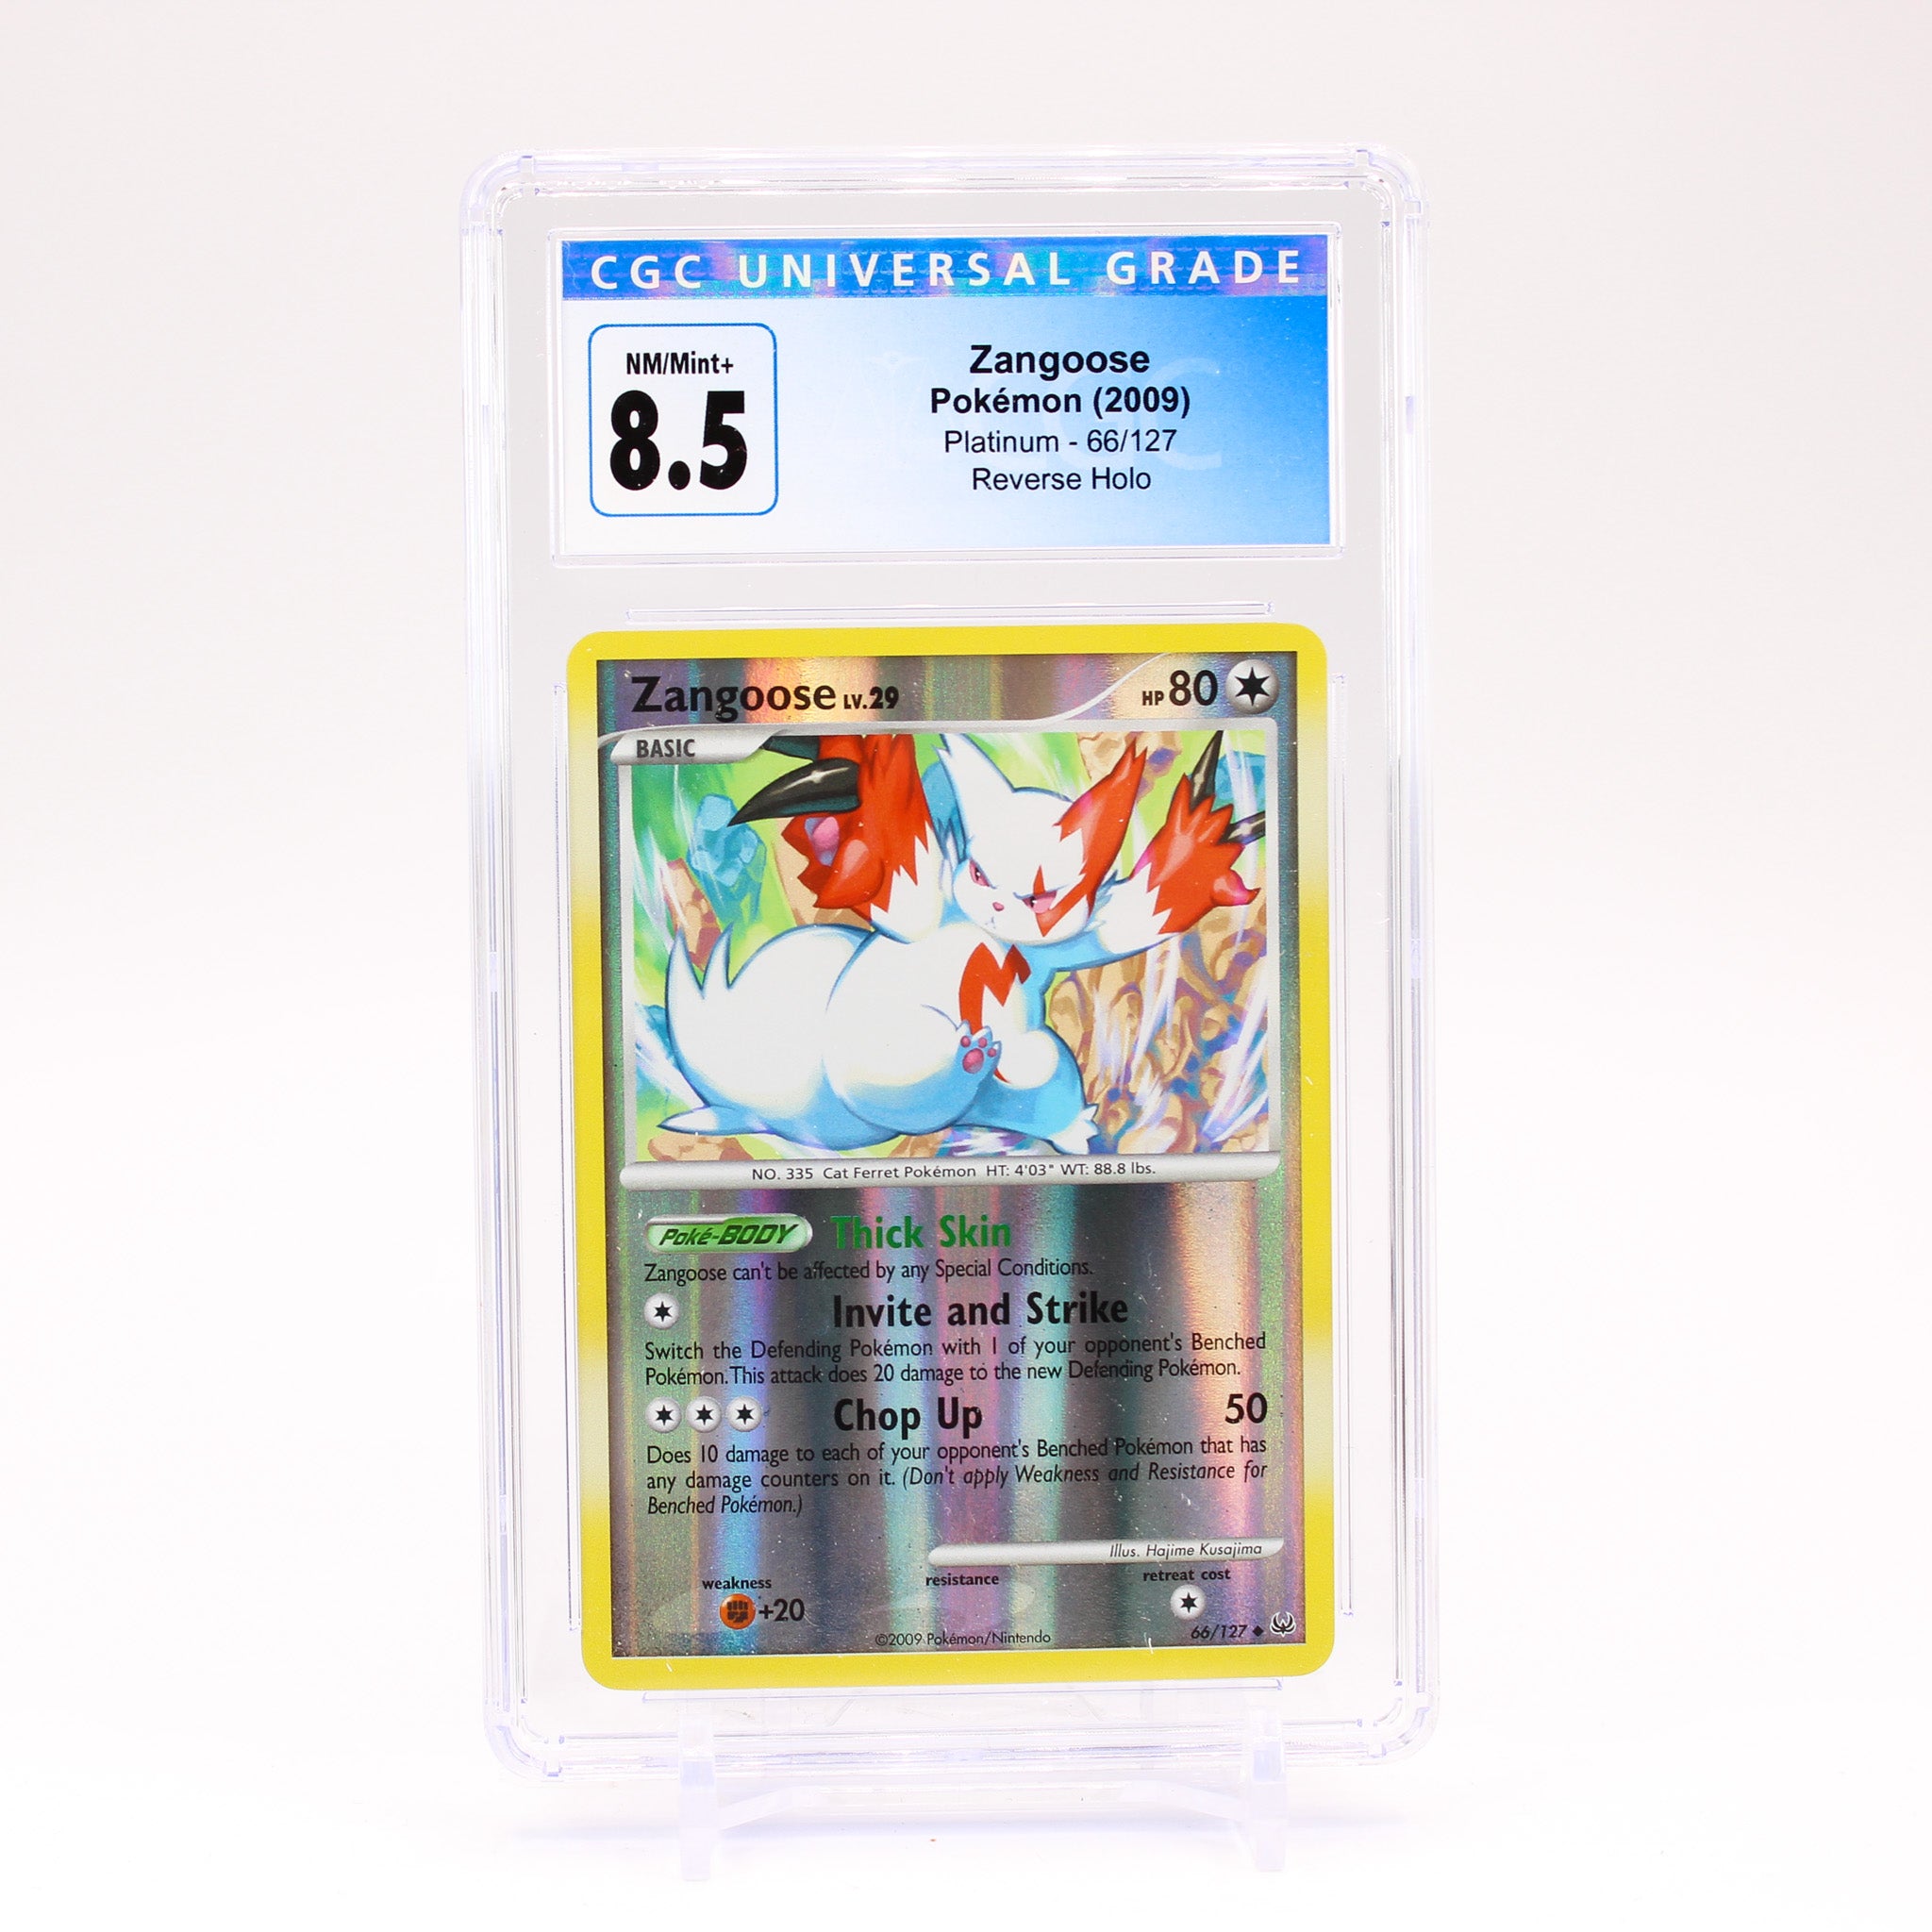 Zangoose - 66/127 CGC 8.5 Platinum Reverse Holo Pokemon - NM/MINT+